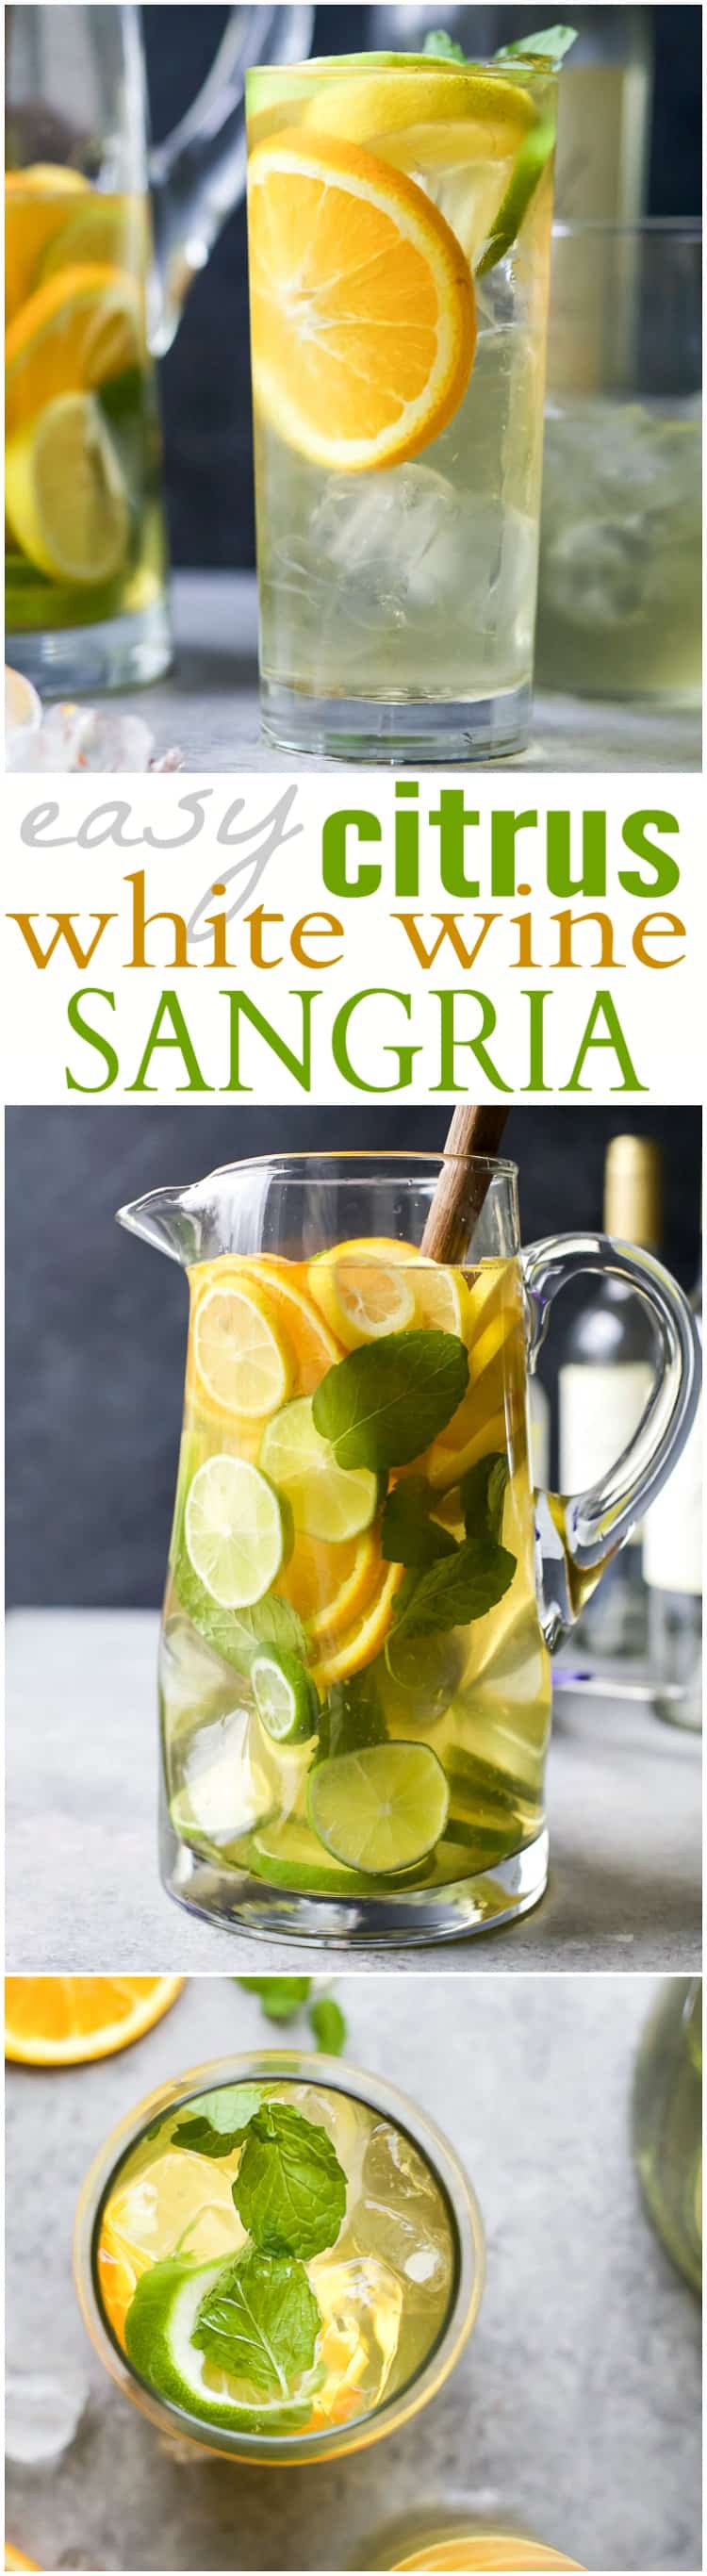 Easy Citrus White Wine Sangria Summer Cocktail Recipe,Crochet Beanie Hat